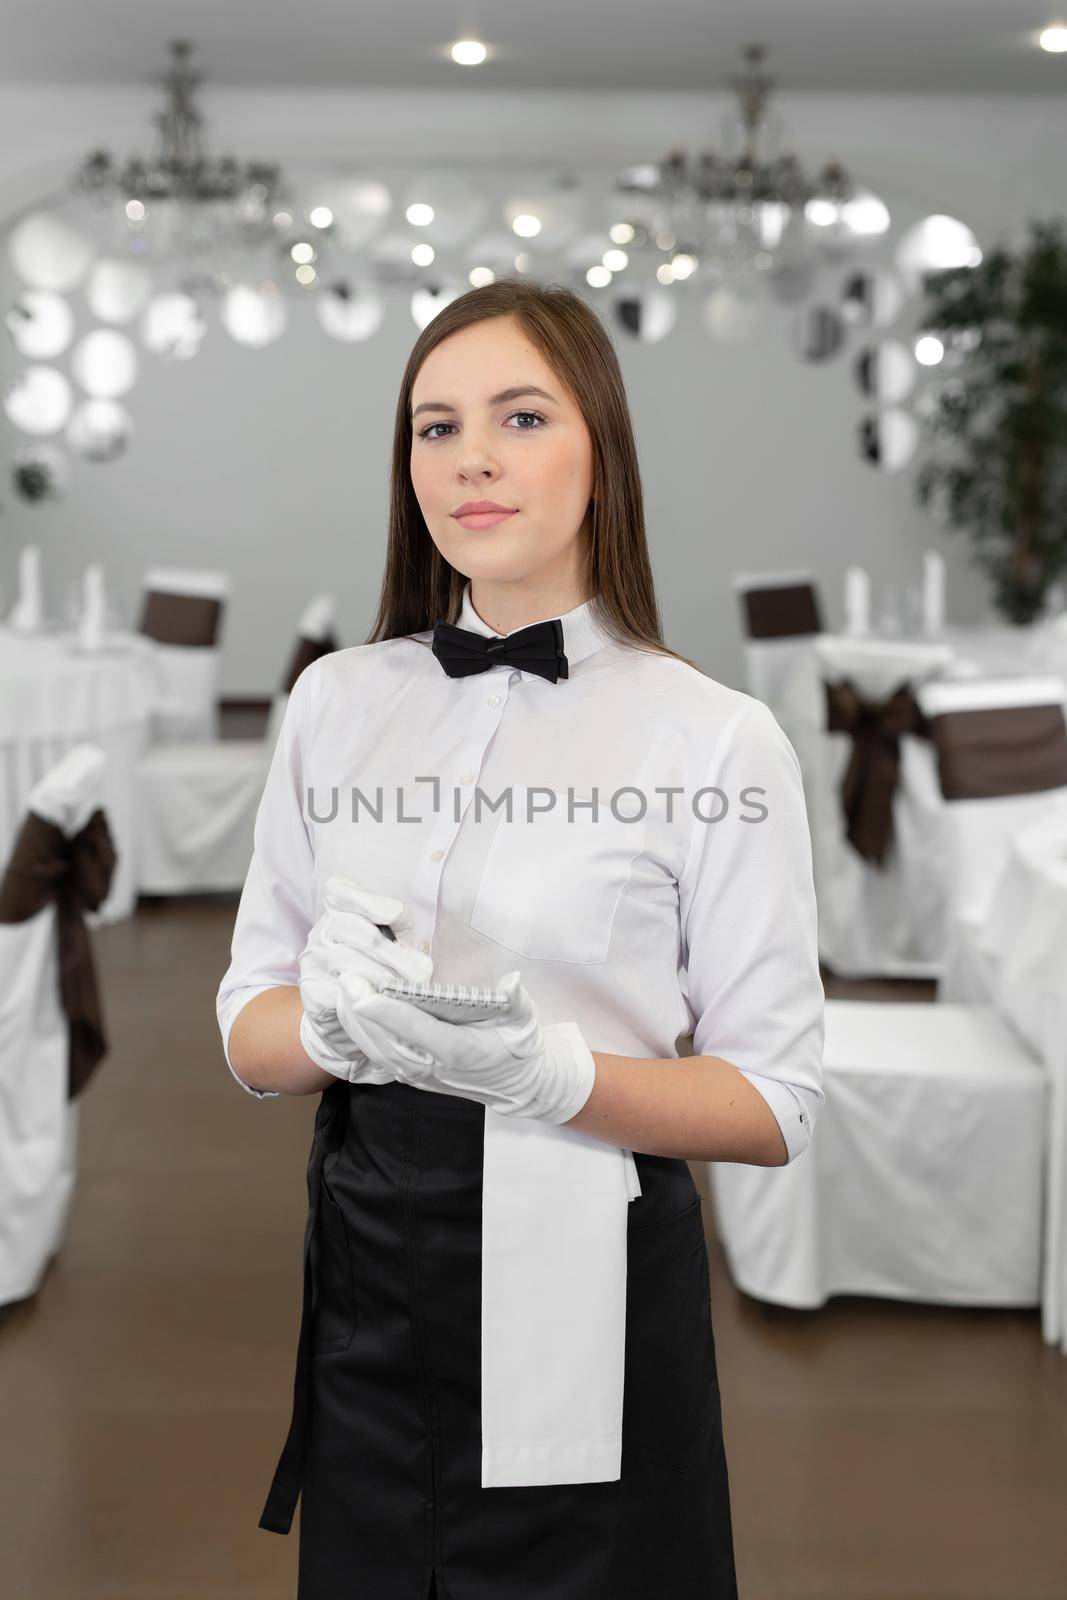 Waiter writing an order into a notebook